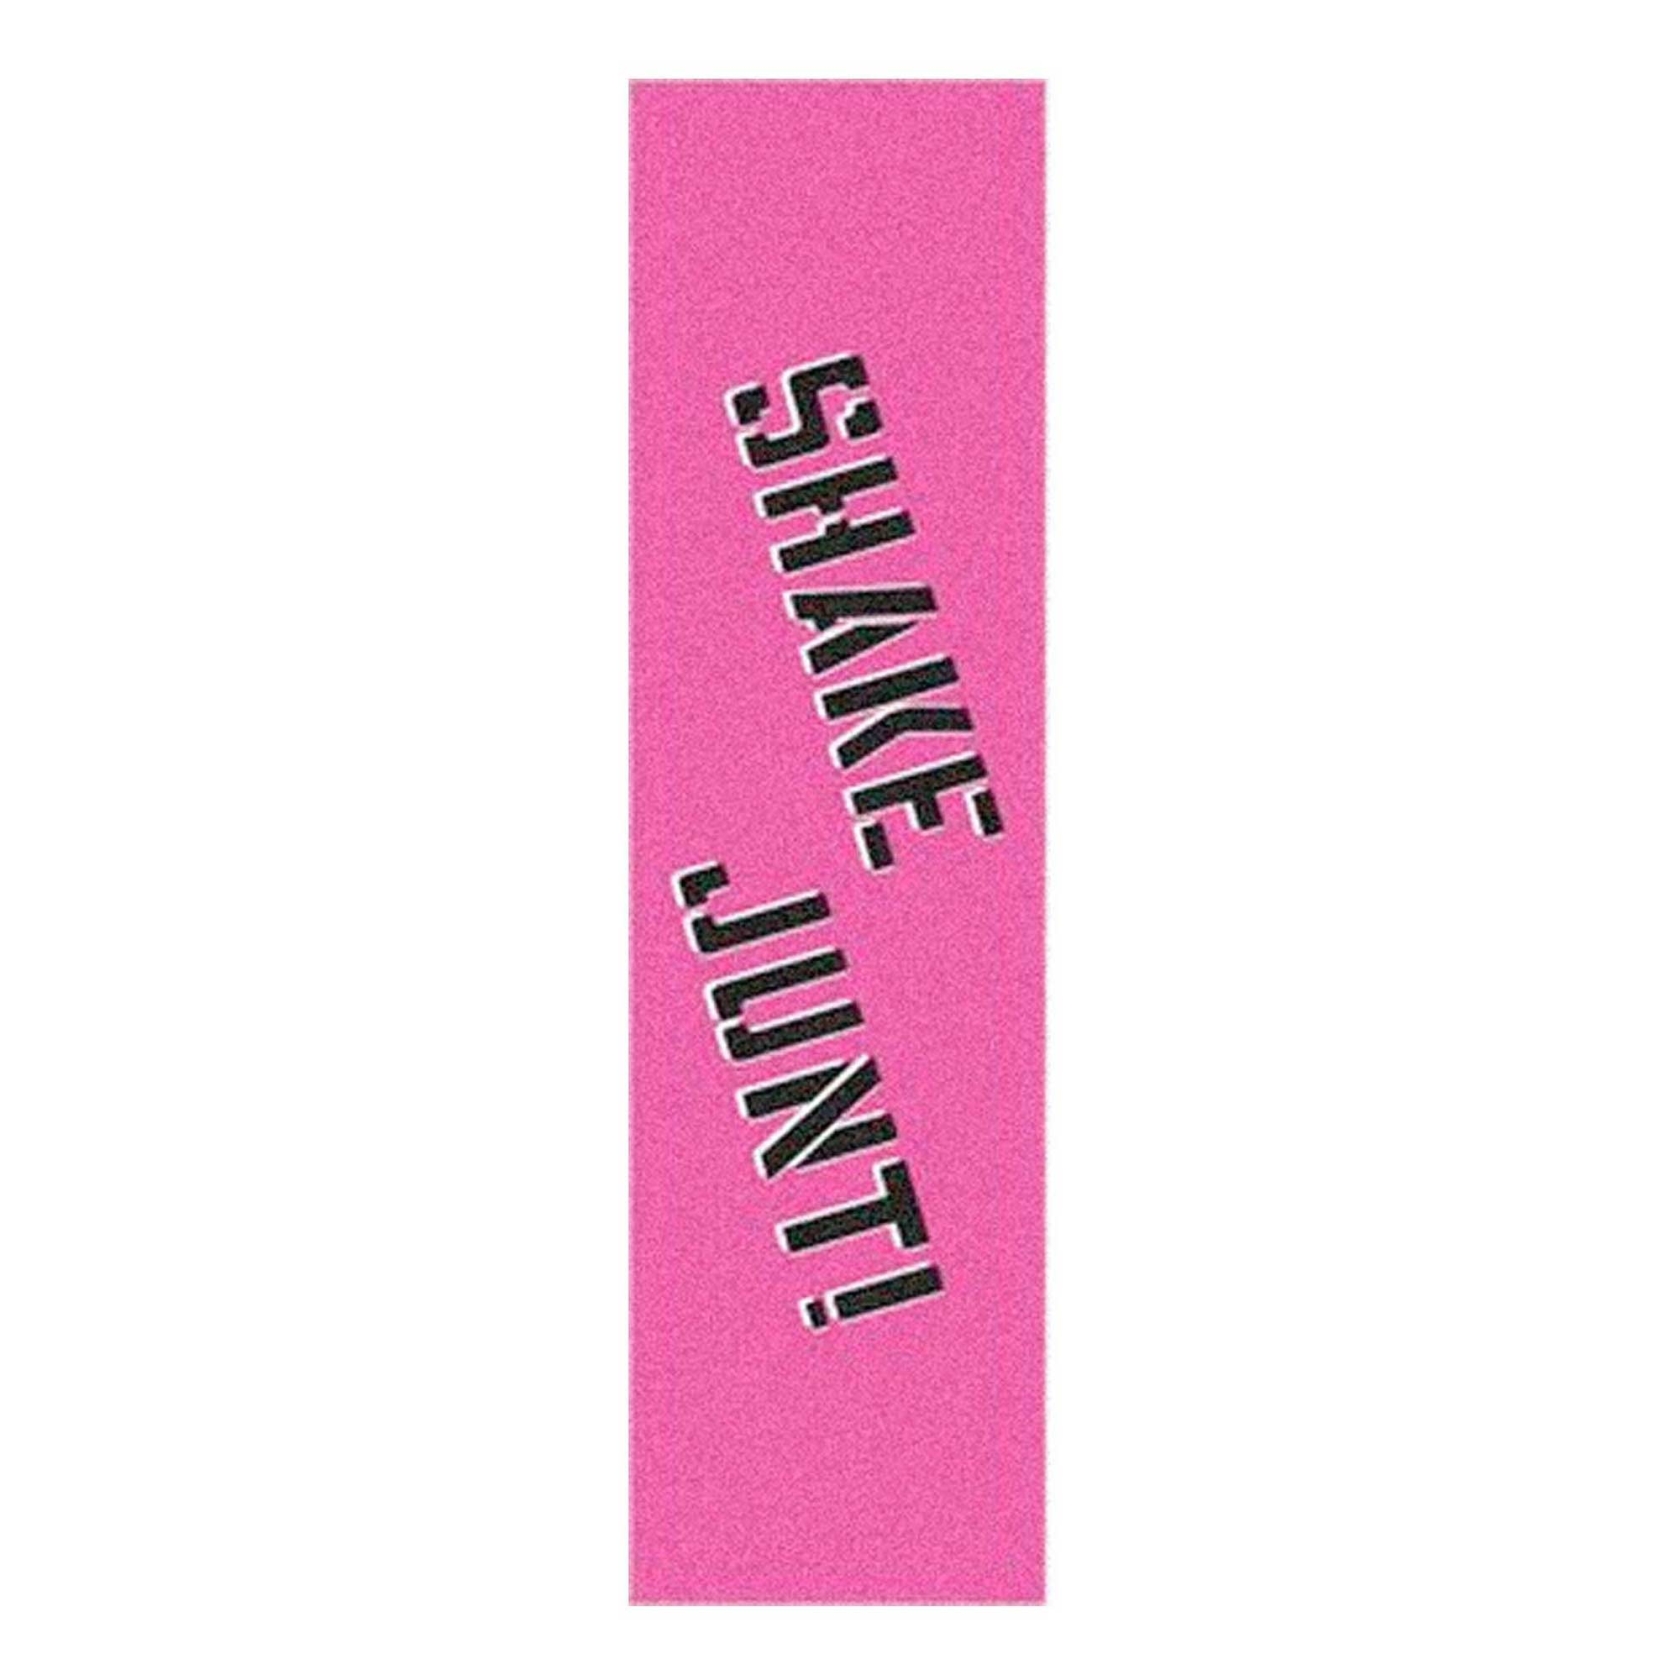 SHAKE JUNT Griptape PINK/BLACK / 1 Sheet, pink/black -